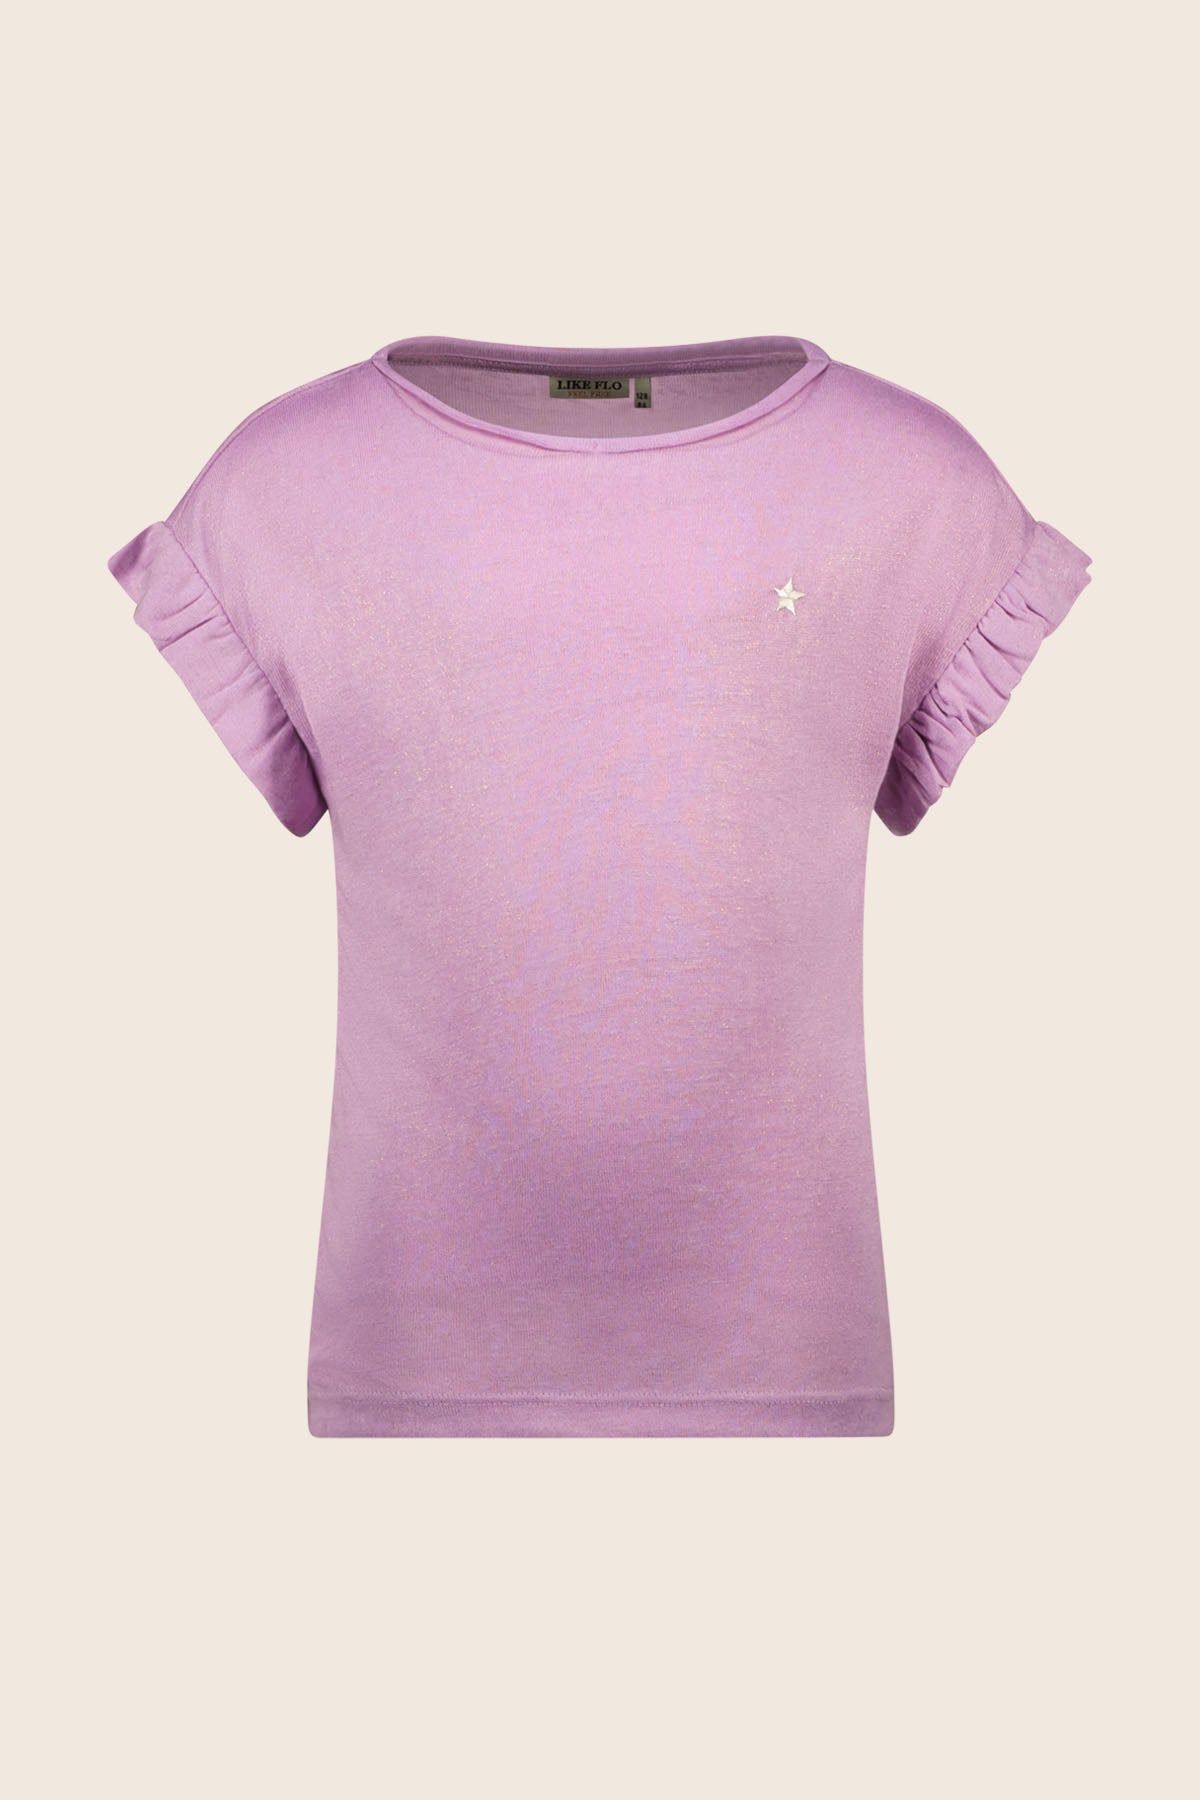 T-Shirt Top GUUSJE lilac